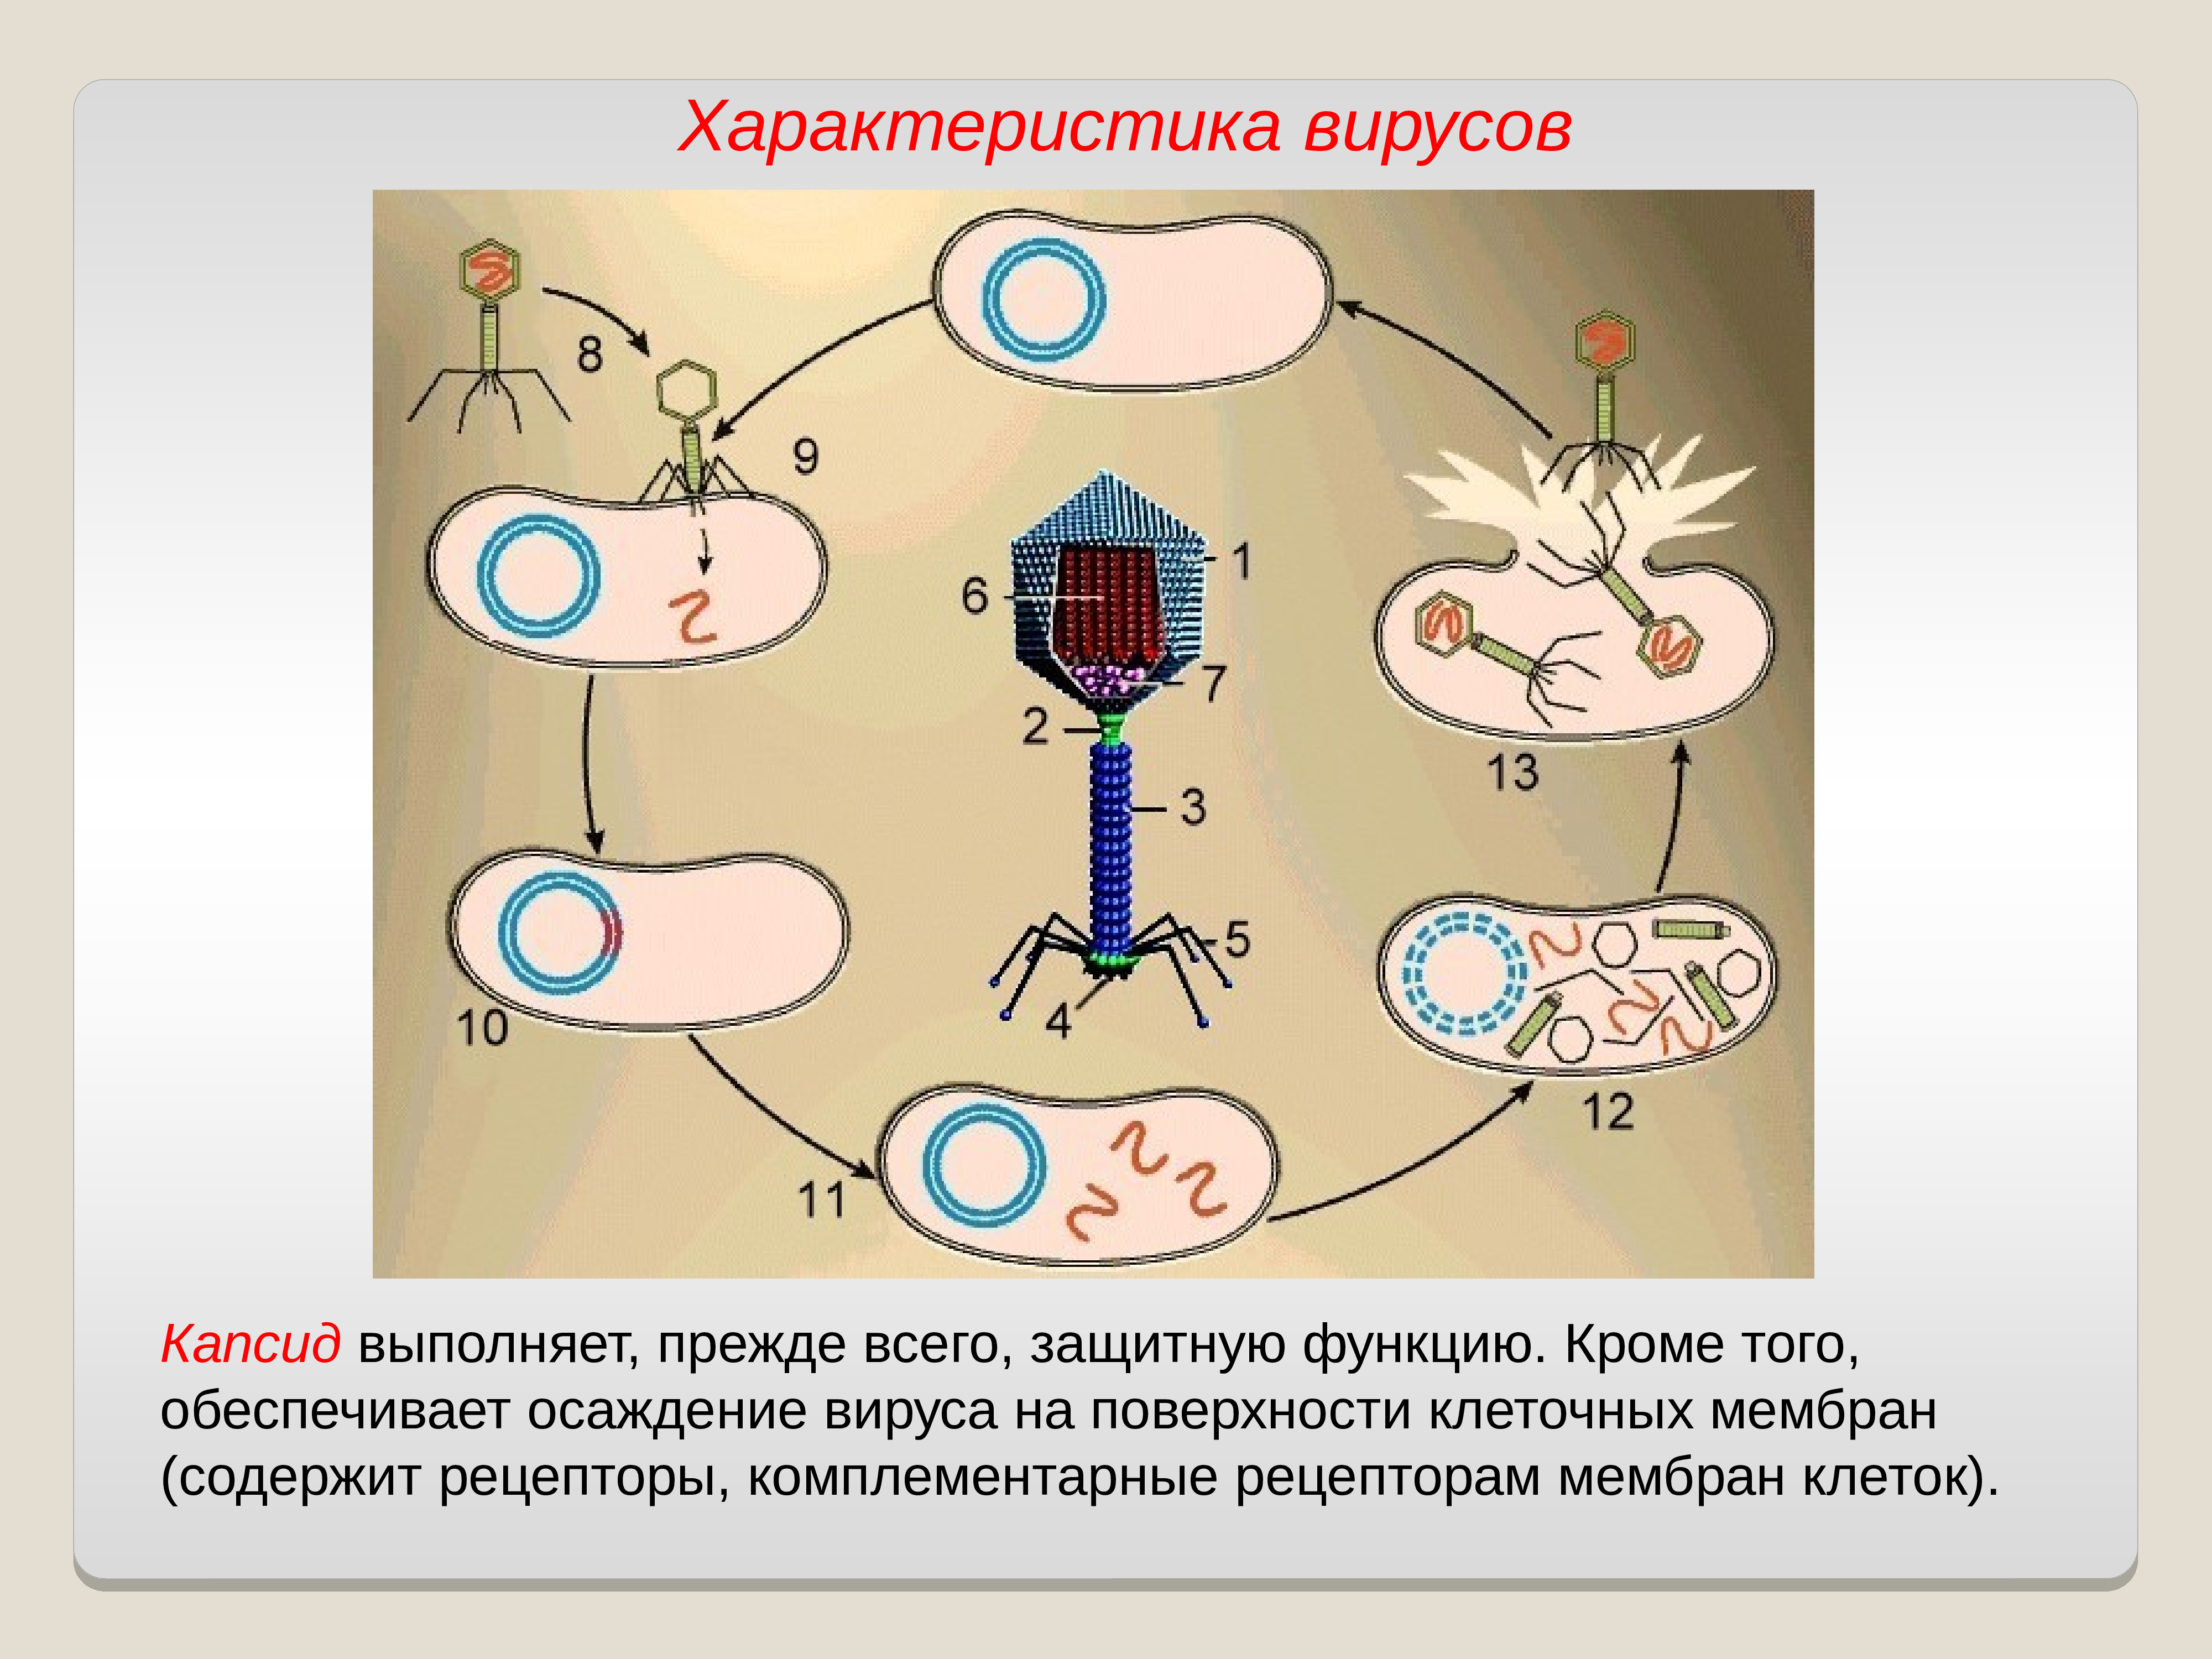 Цикл бактерии. Жизненный цикл вируса бактериофага. Цикл развития вируса бактериофага. Схема цикла размножения бактериофага. Этапы жизненного цикла бактериофага.